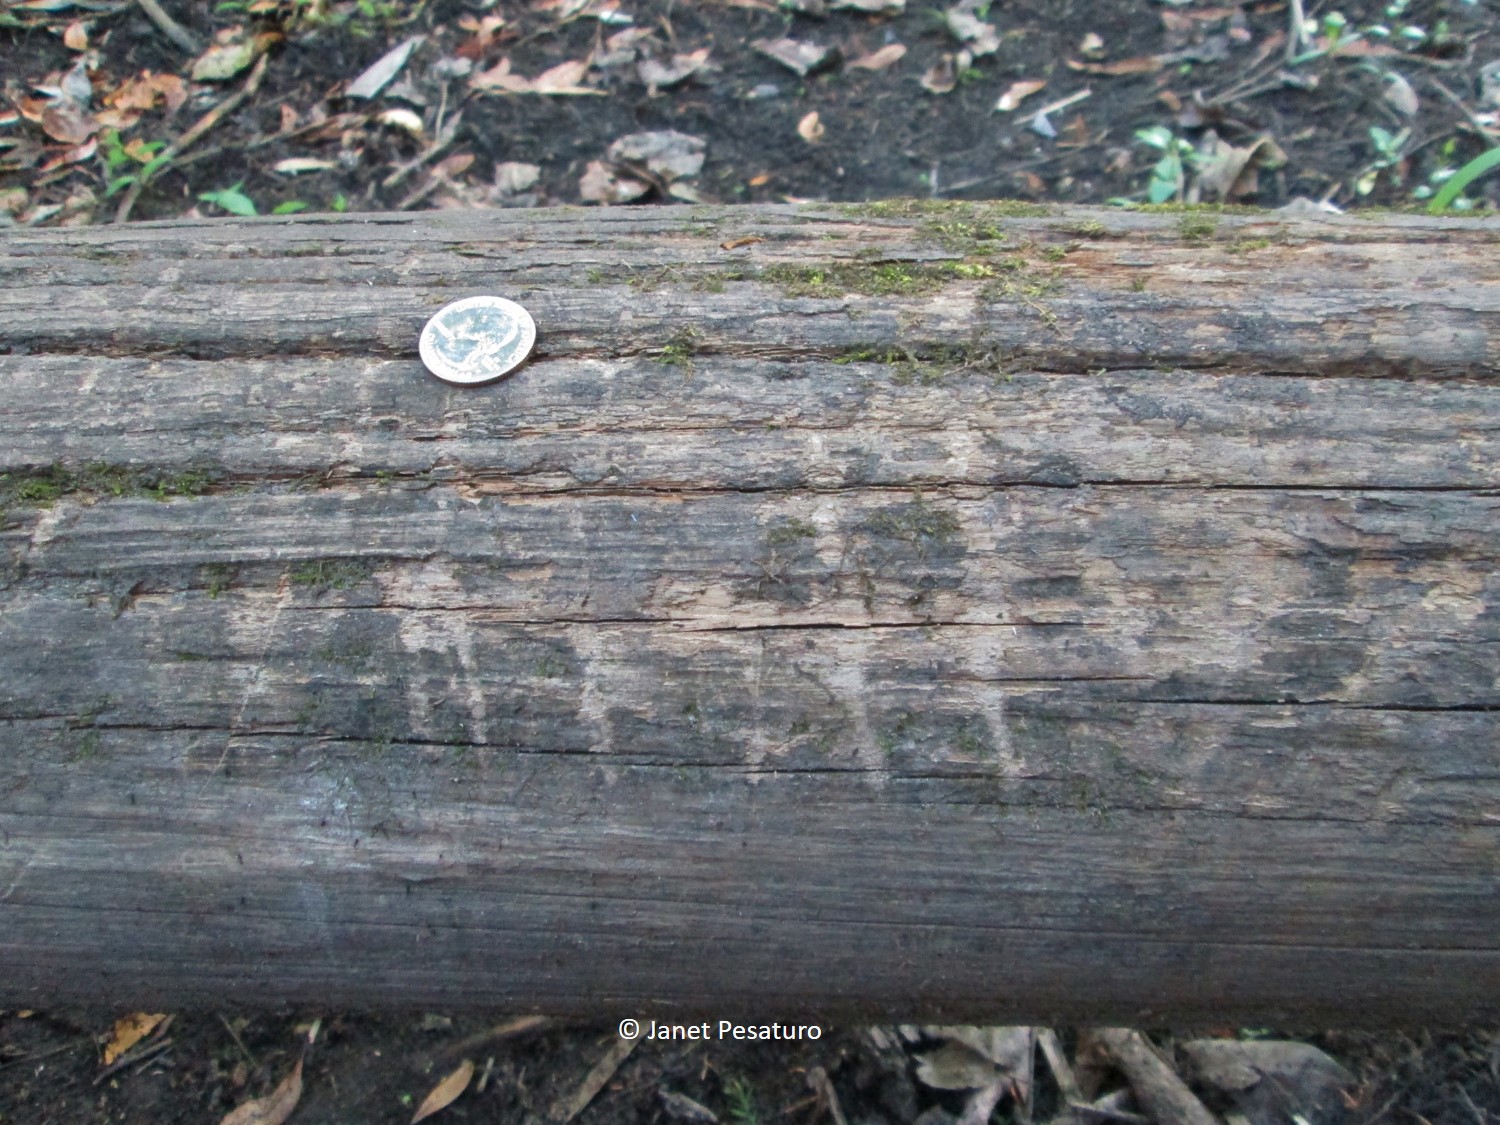 alligator claw marks on a log that crosses a run